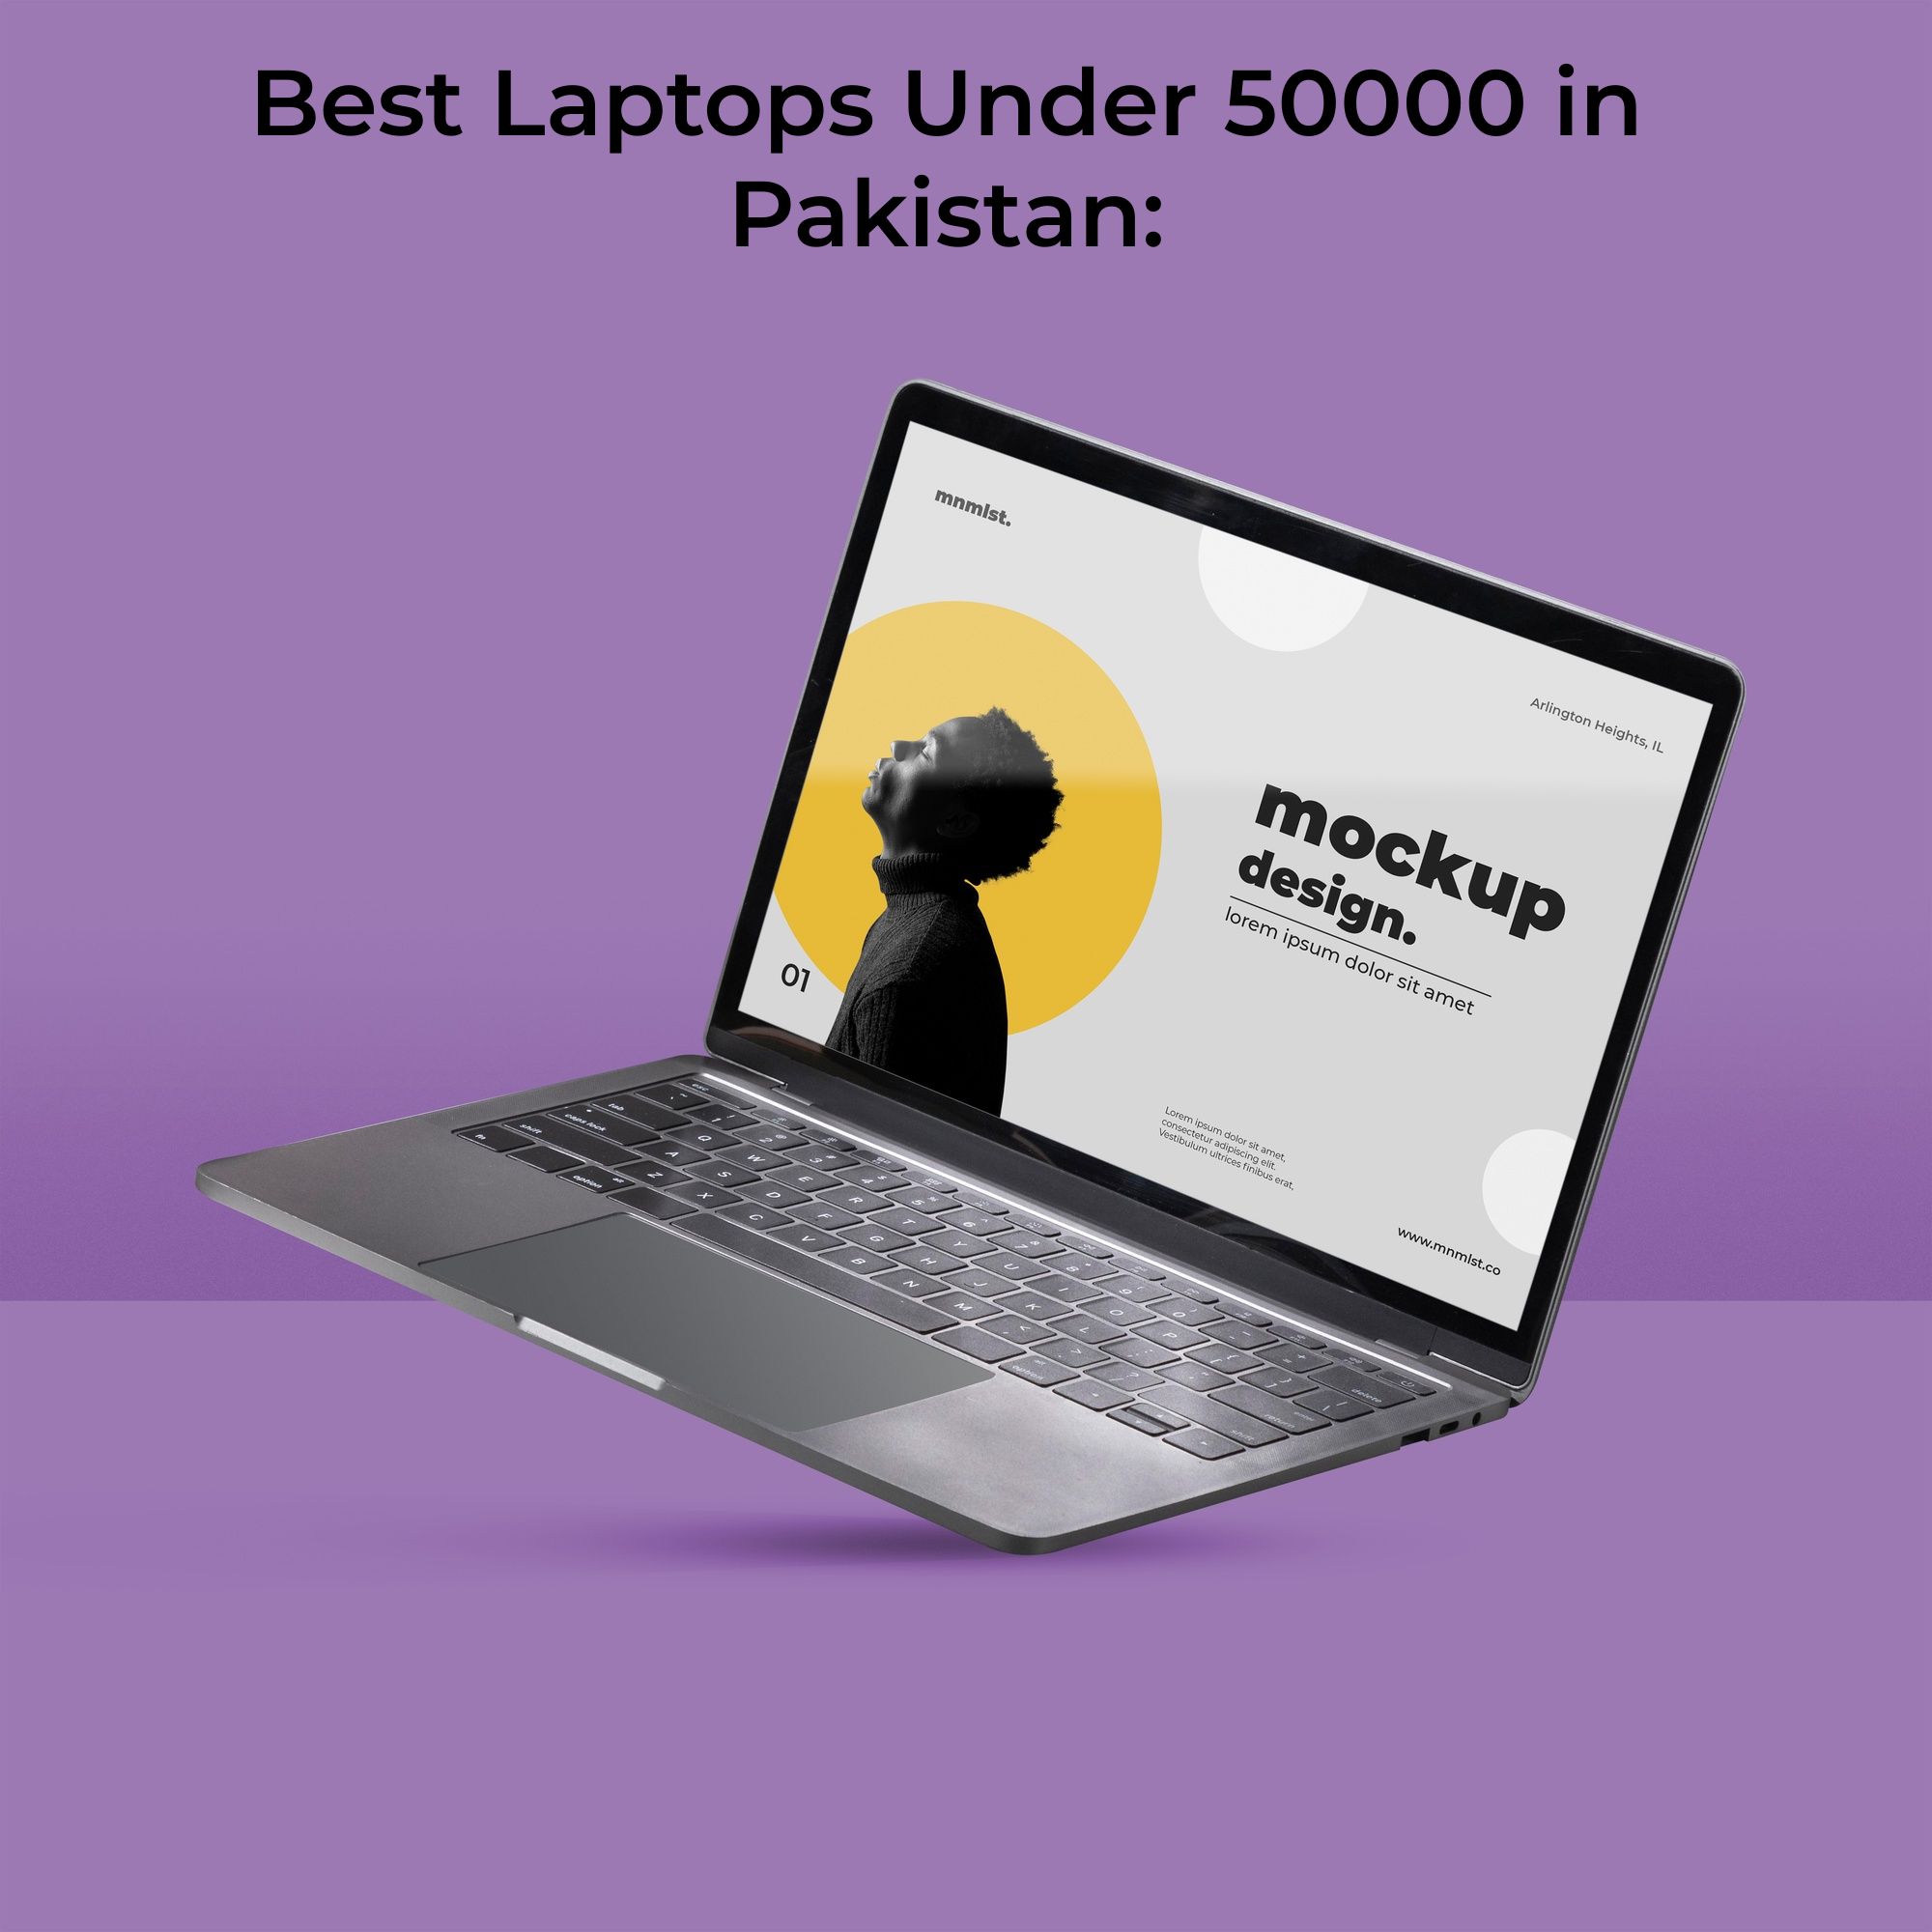 Best Laptops Under 50000 in Pakistan